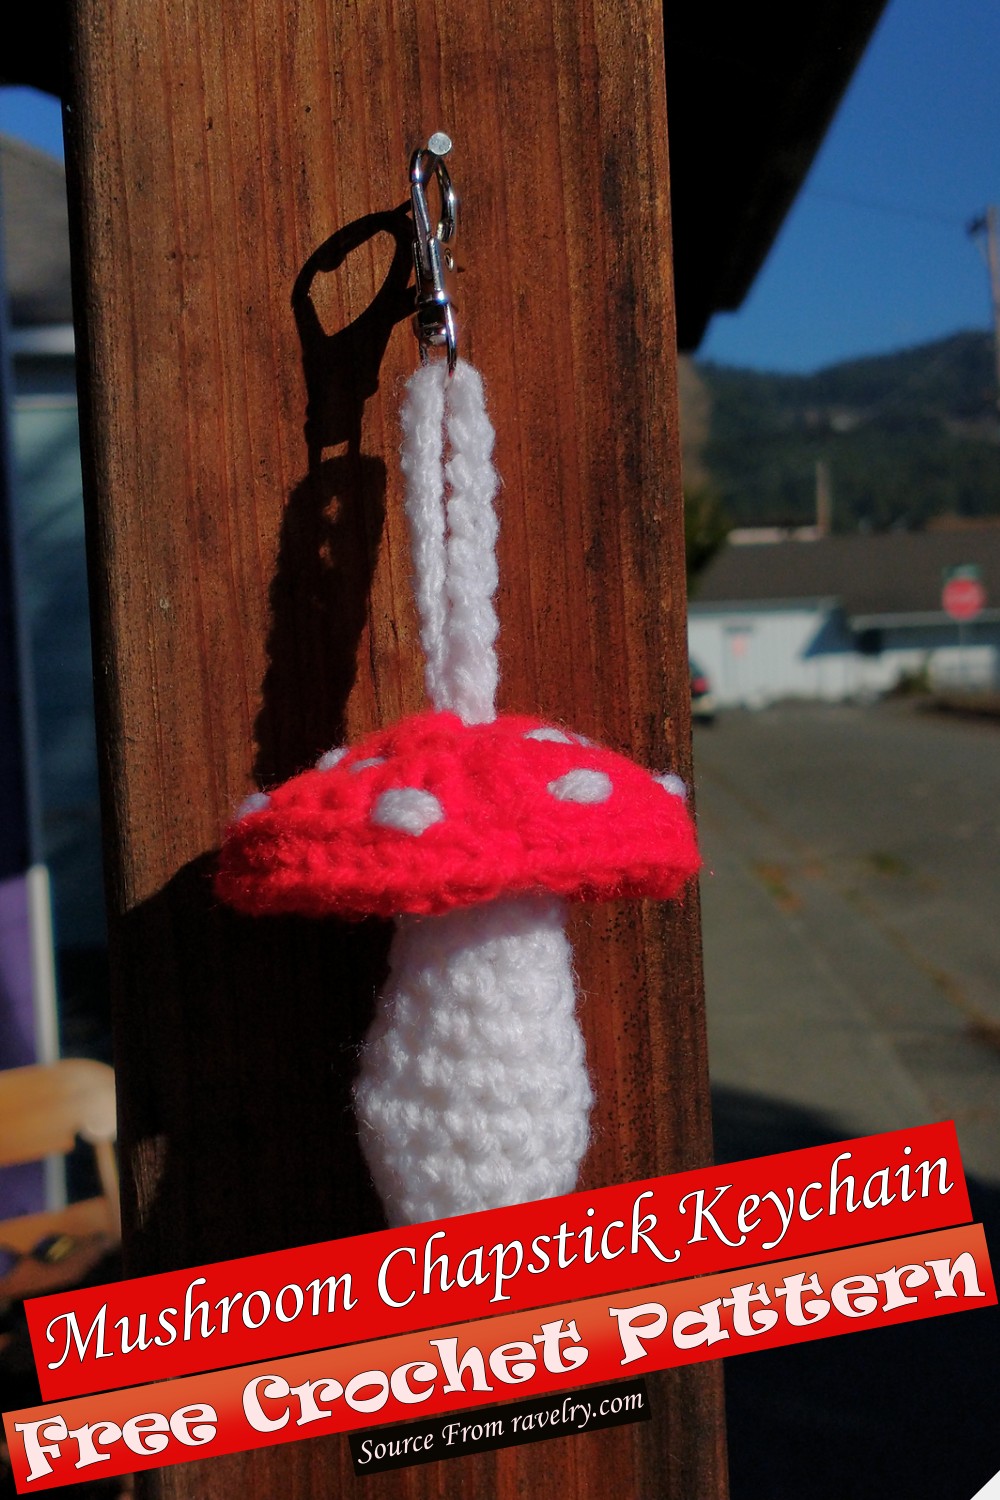 Free Crochet Mushroom Chapstick Keychain Pattern